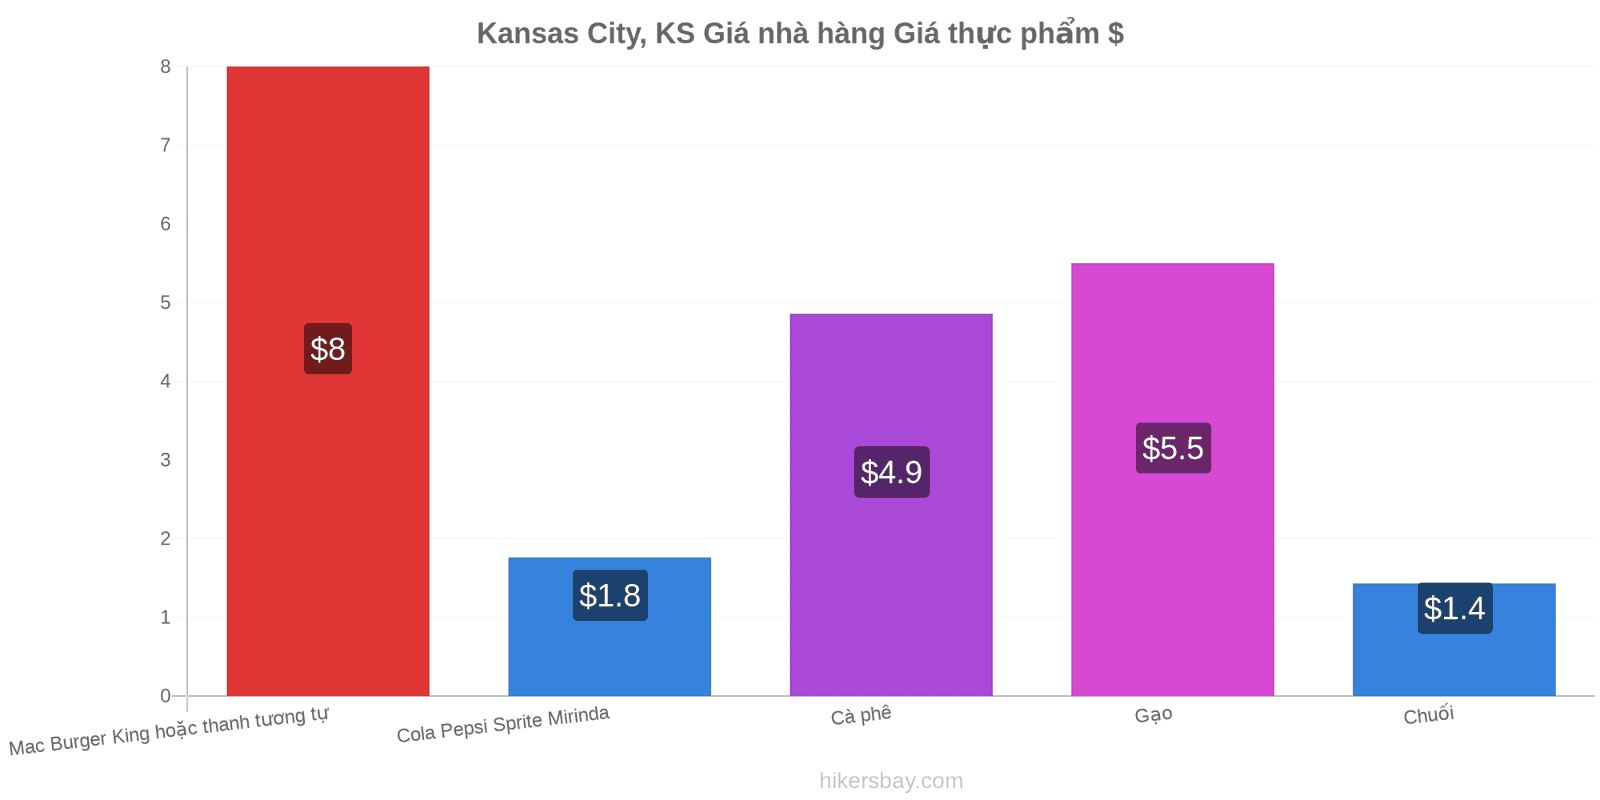 Kansas City, KS thay đổi giá cả hikersbay.com